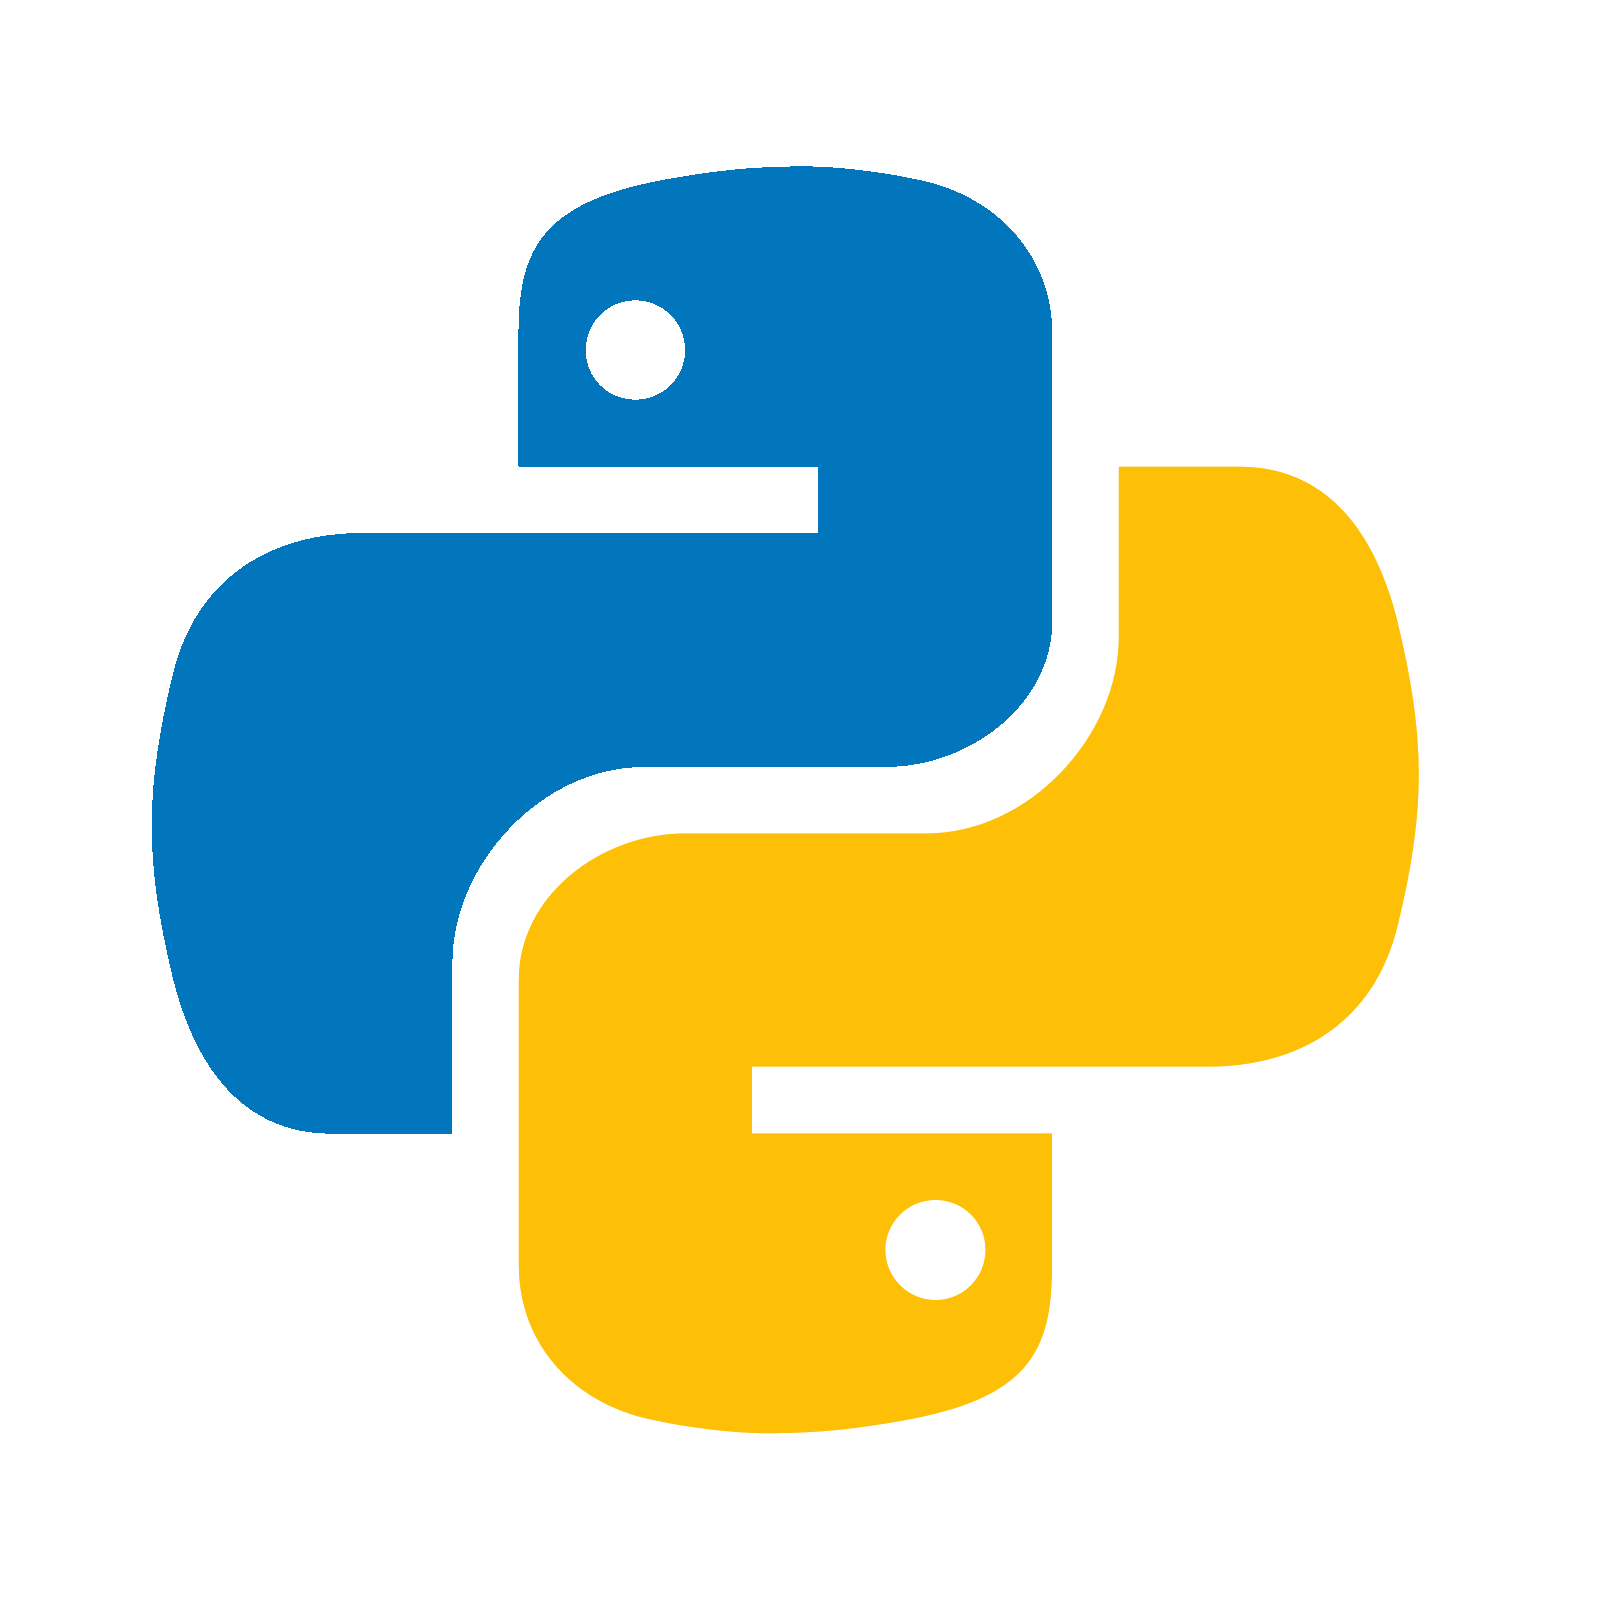 Python Logo PNG Clipart